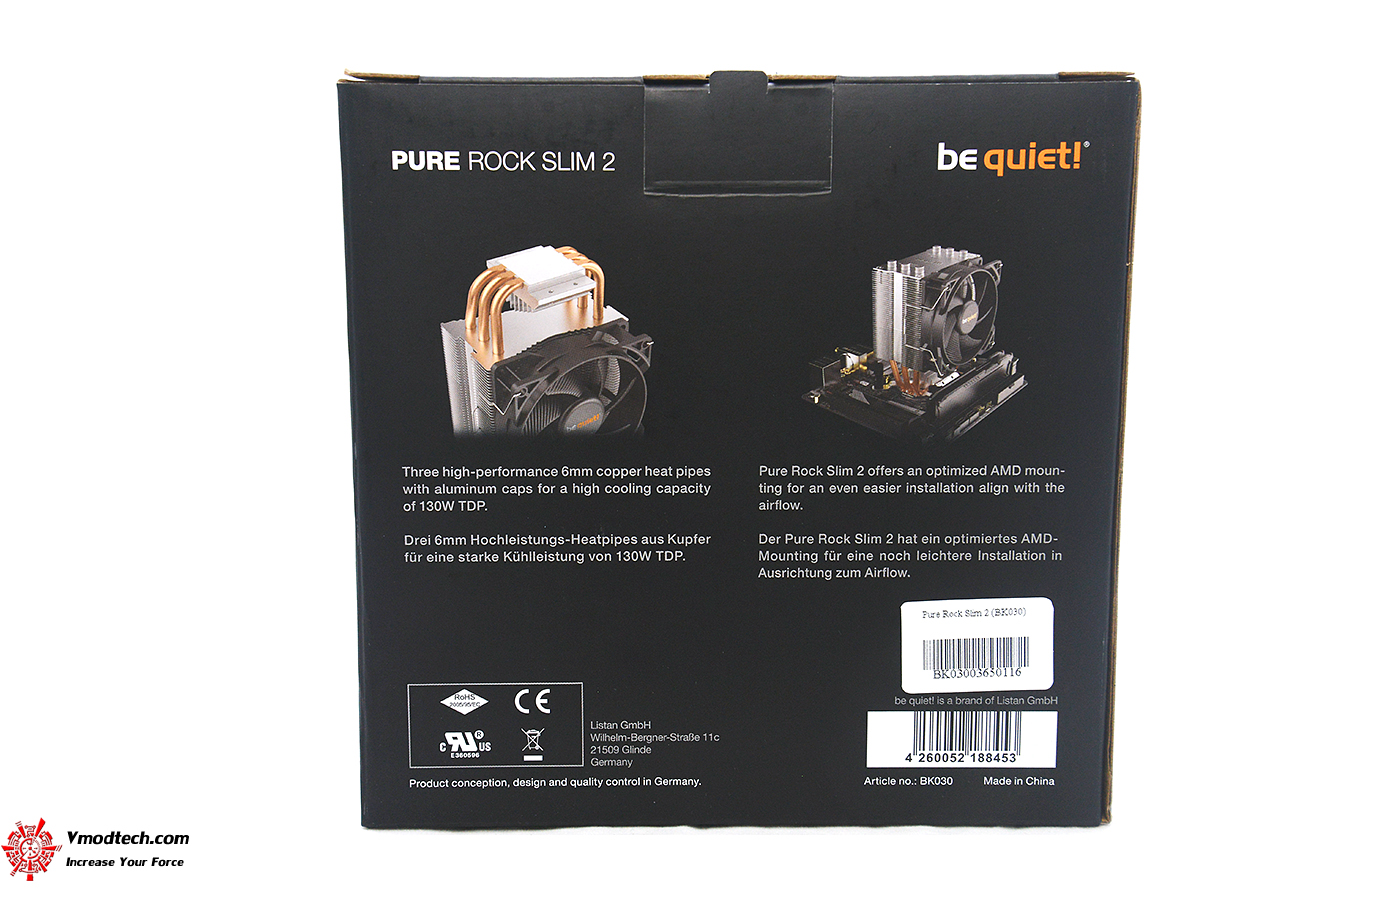 dsc 4867 Be quiet! Pure Rock Slim 2 CPU cooler Review